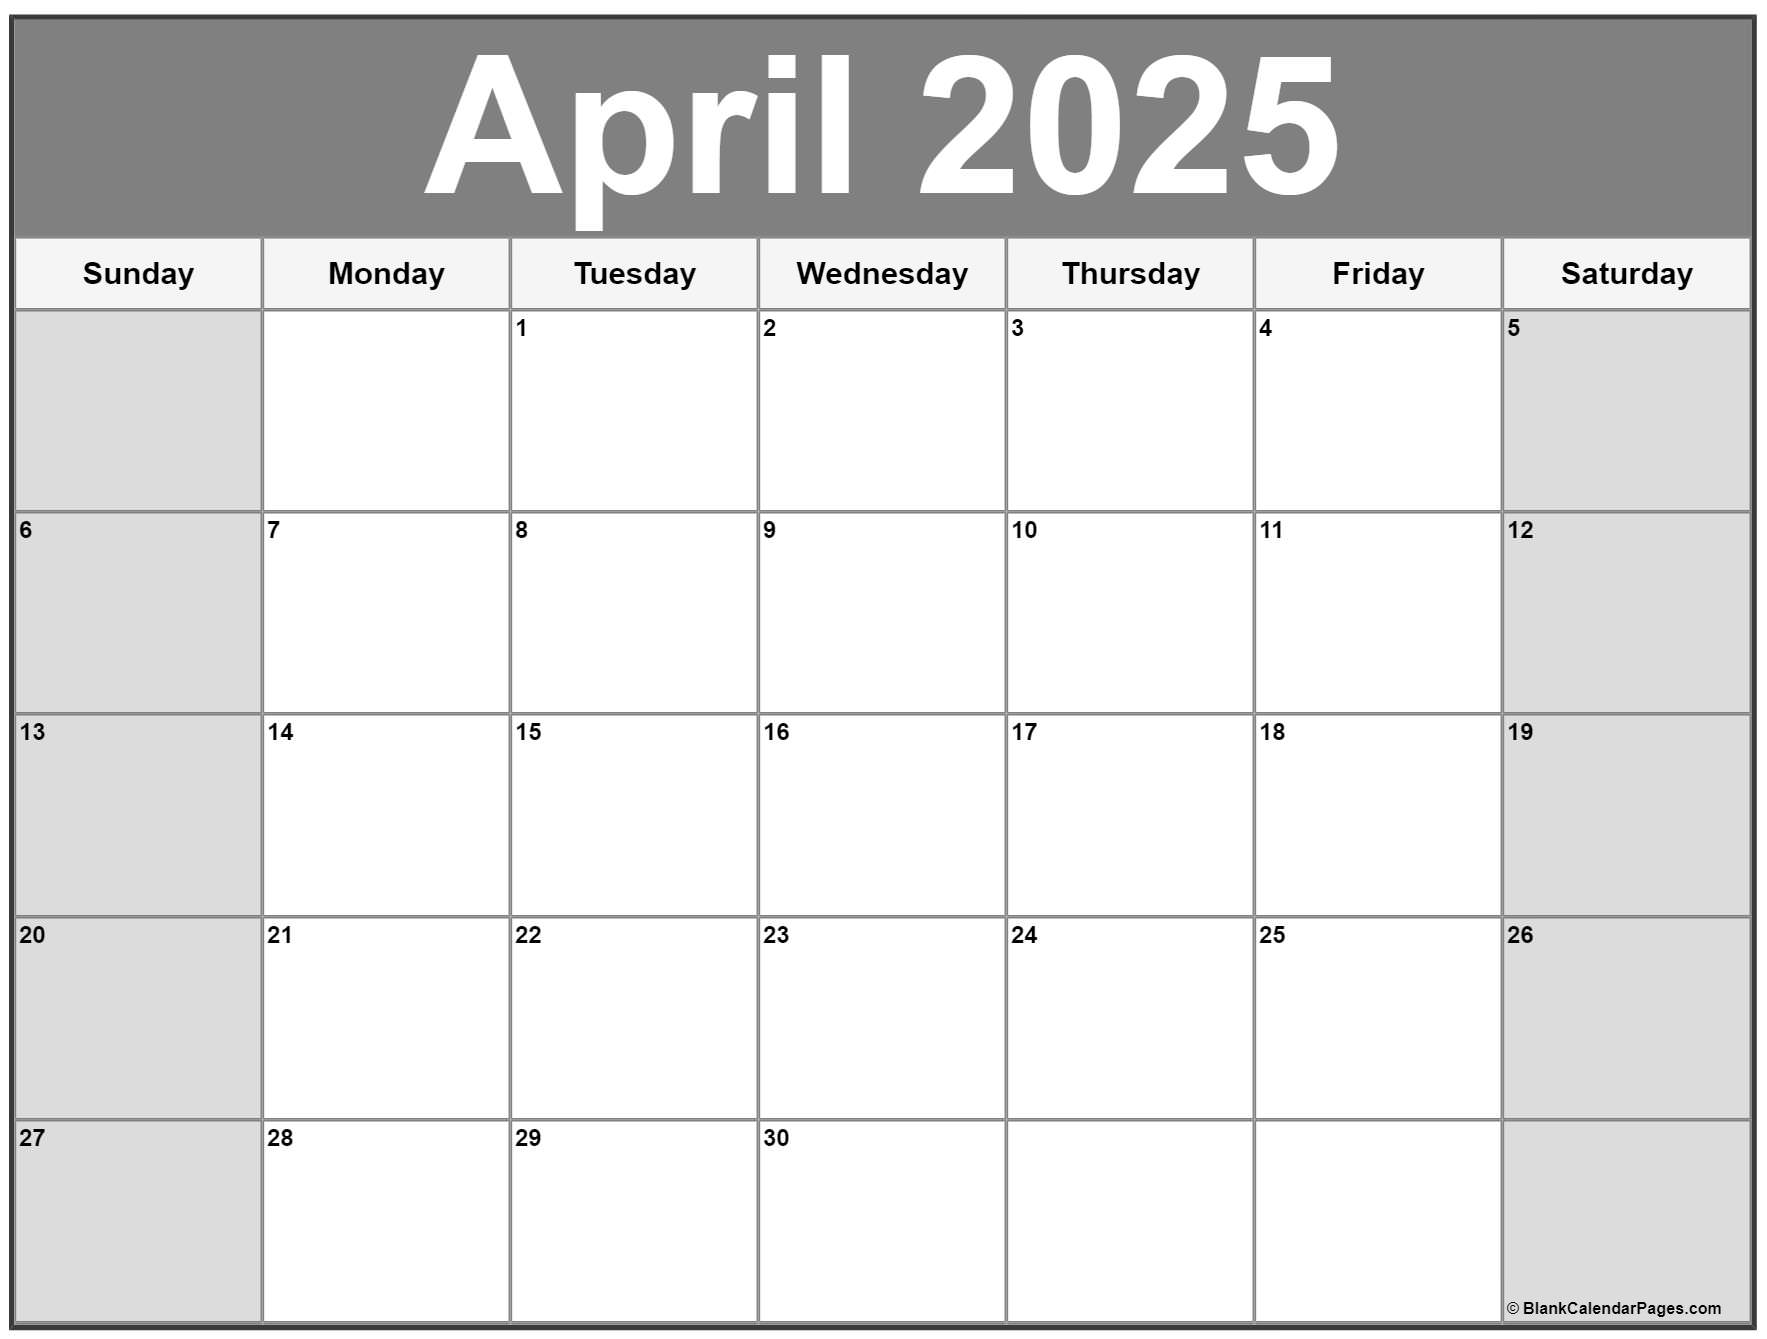 april-2025-calendar-free-printable-calendar